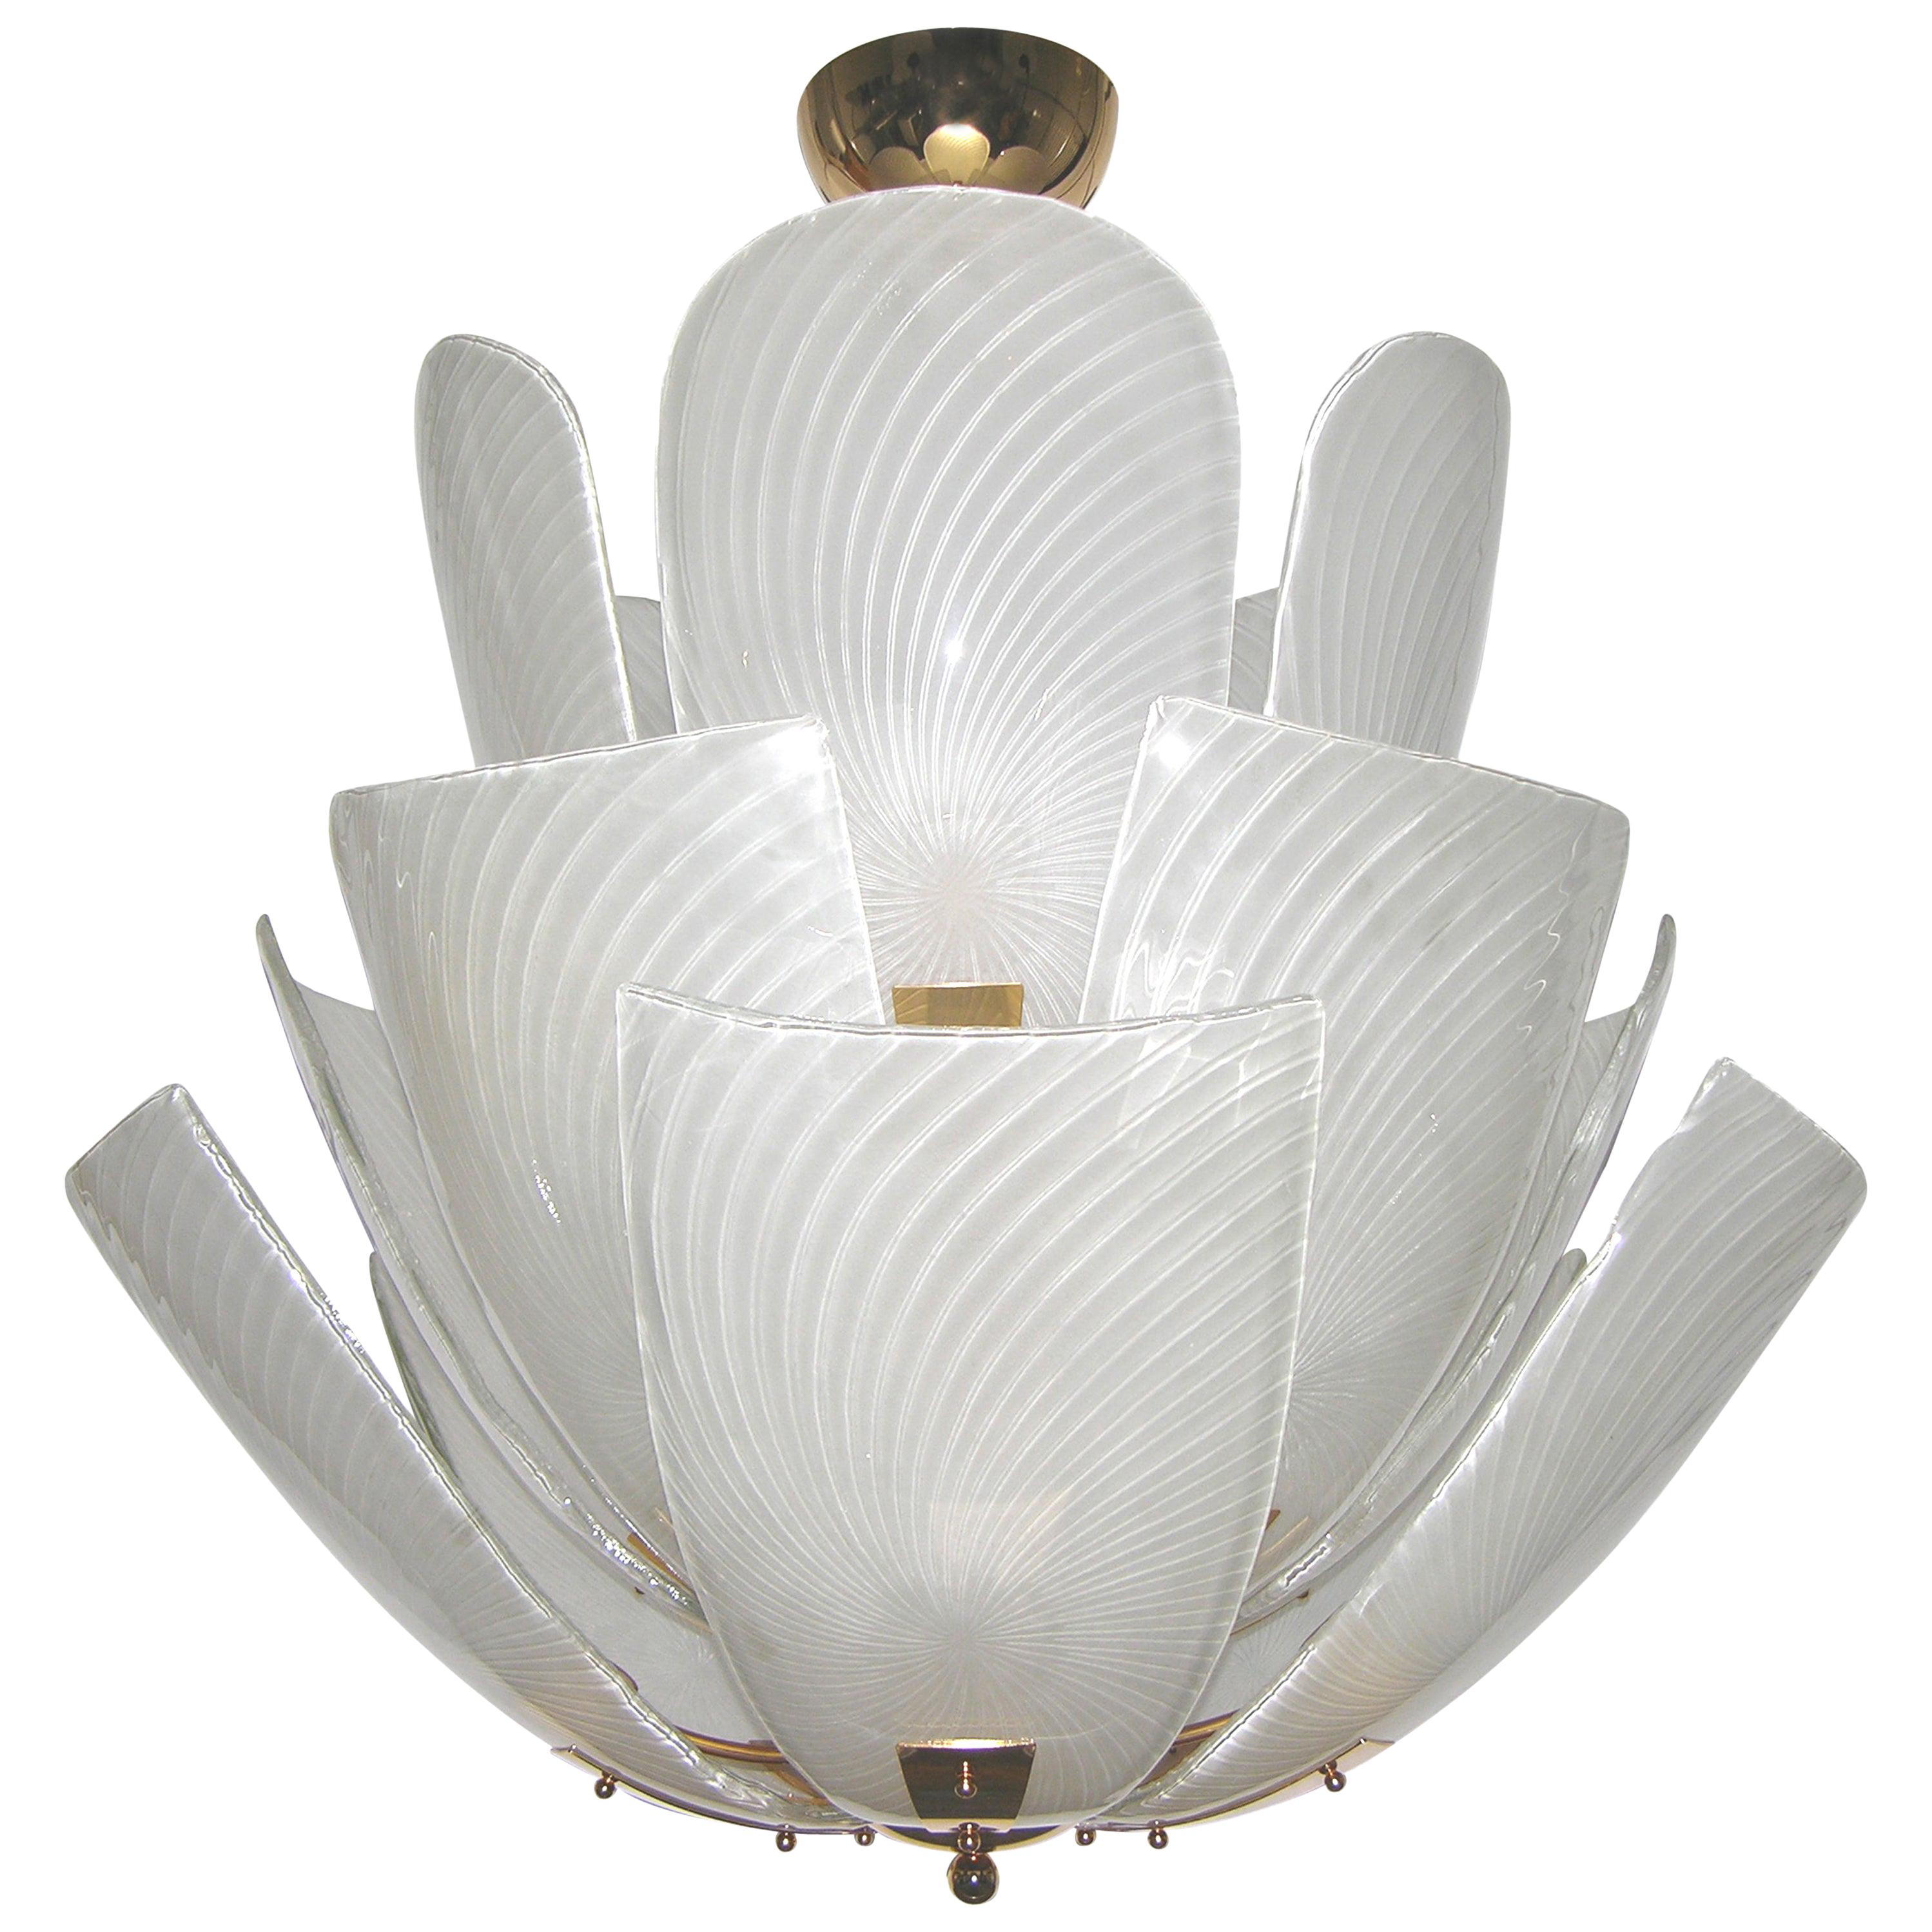 Bespoke Italian Art Nouveau Organic Design White Murano Glass Lotus Chandelier